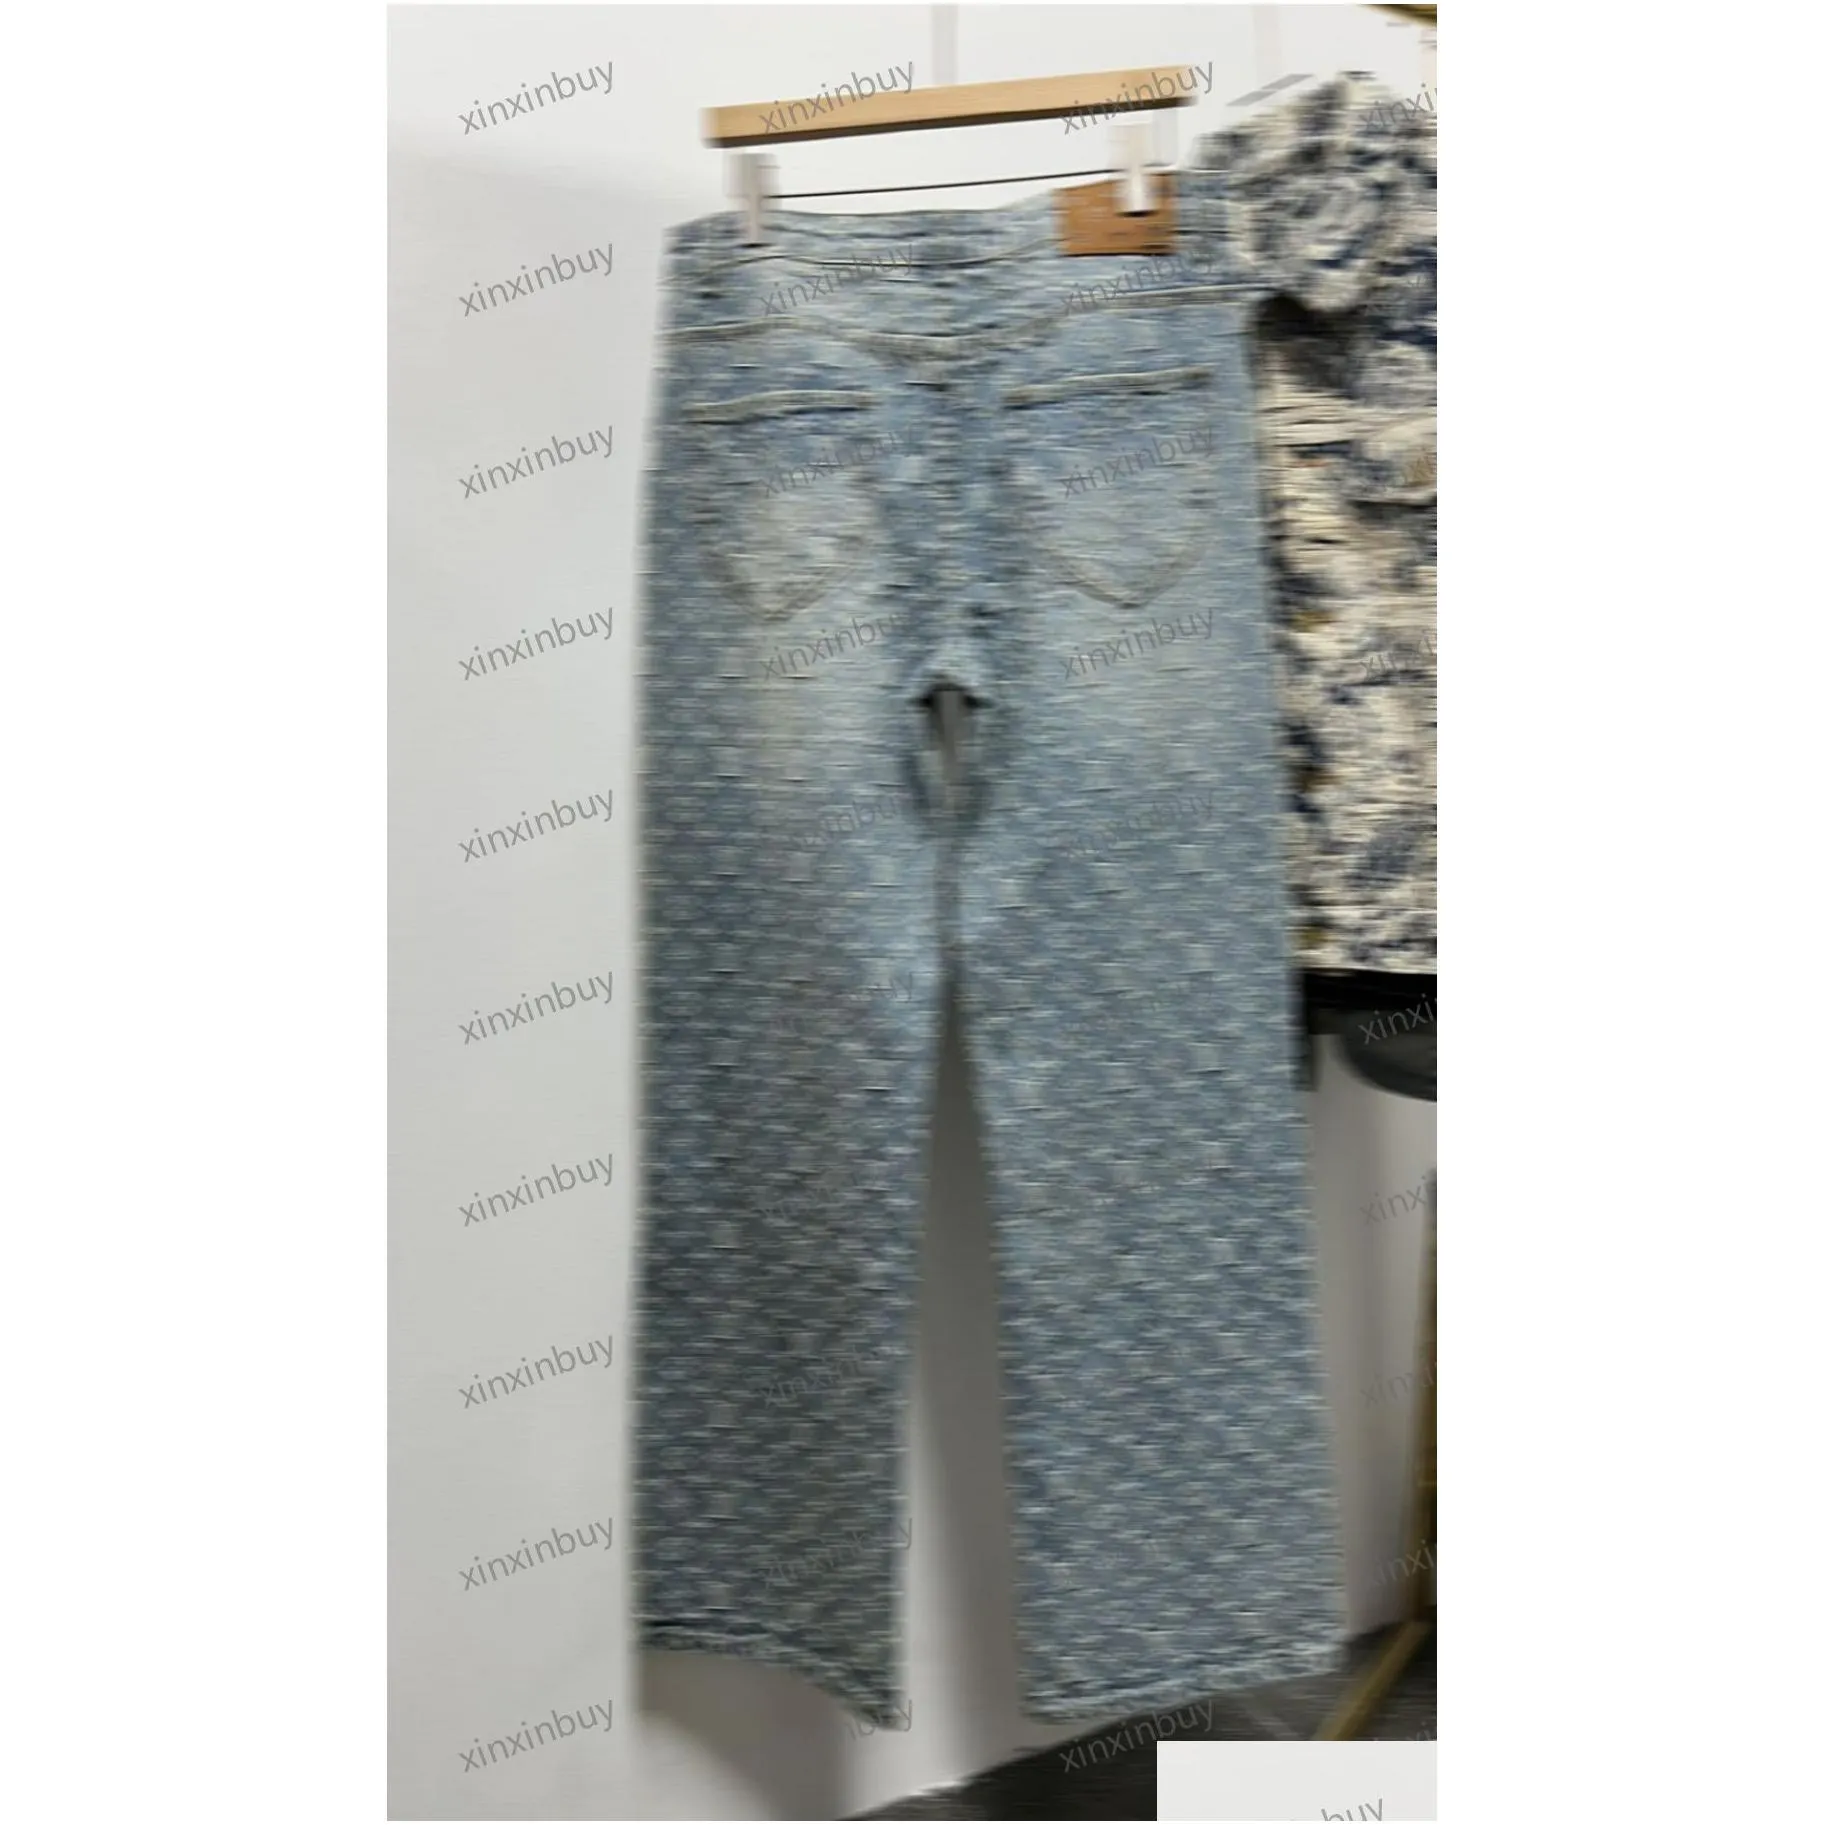  Men women designer pant Sport Letter jacquard 1854 Spring summer Casual pants letter khaki Grey black blue S-2XL